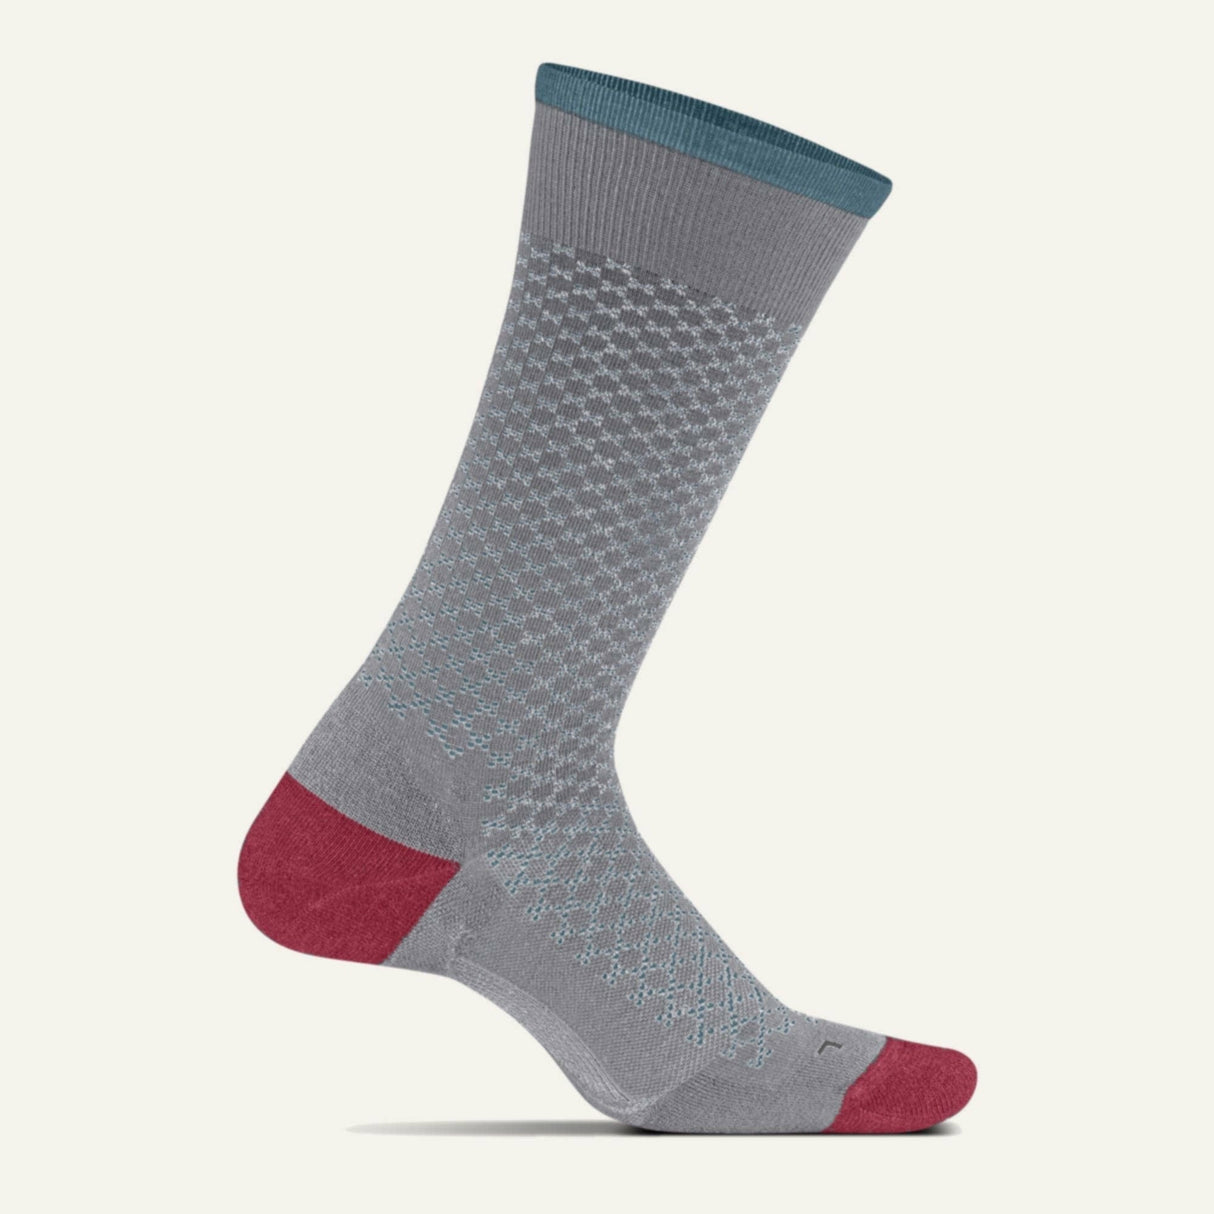 Feetures Mens Everyday Mod Jacquard Cushion Crew Socks  -  Medium / Light Gray